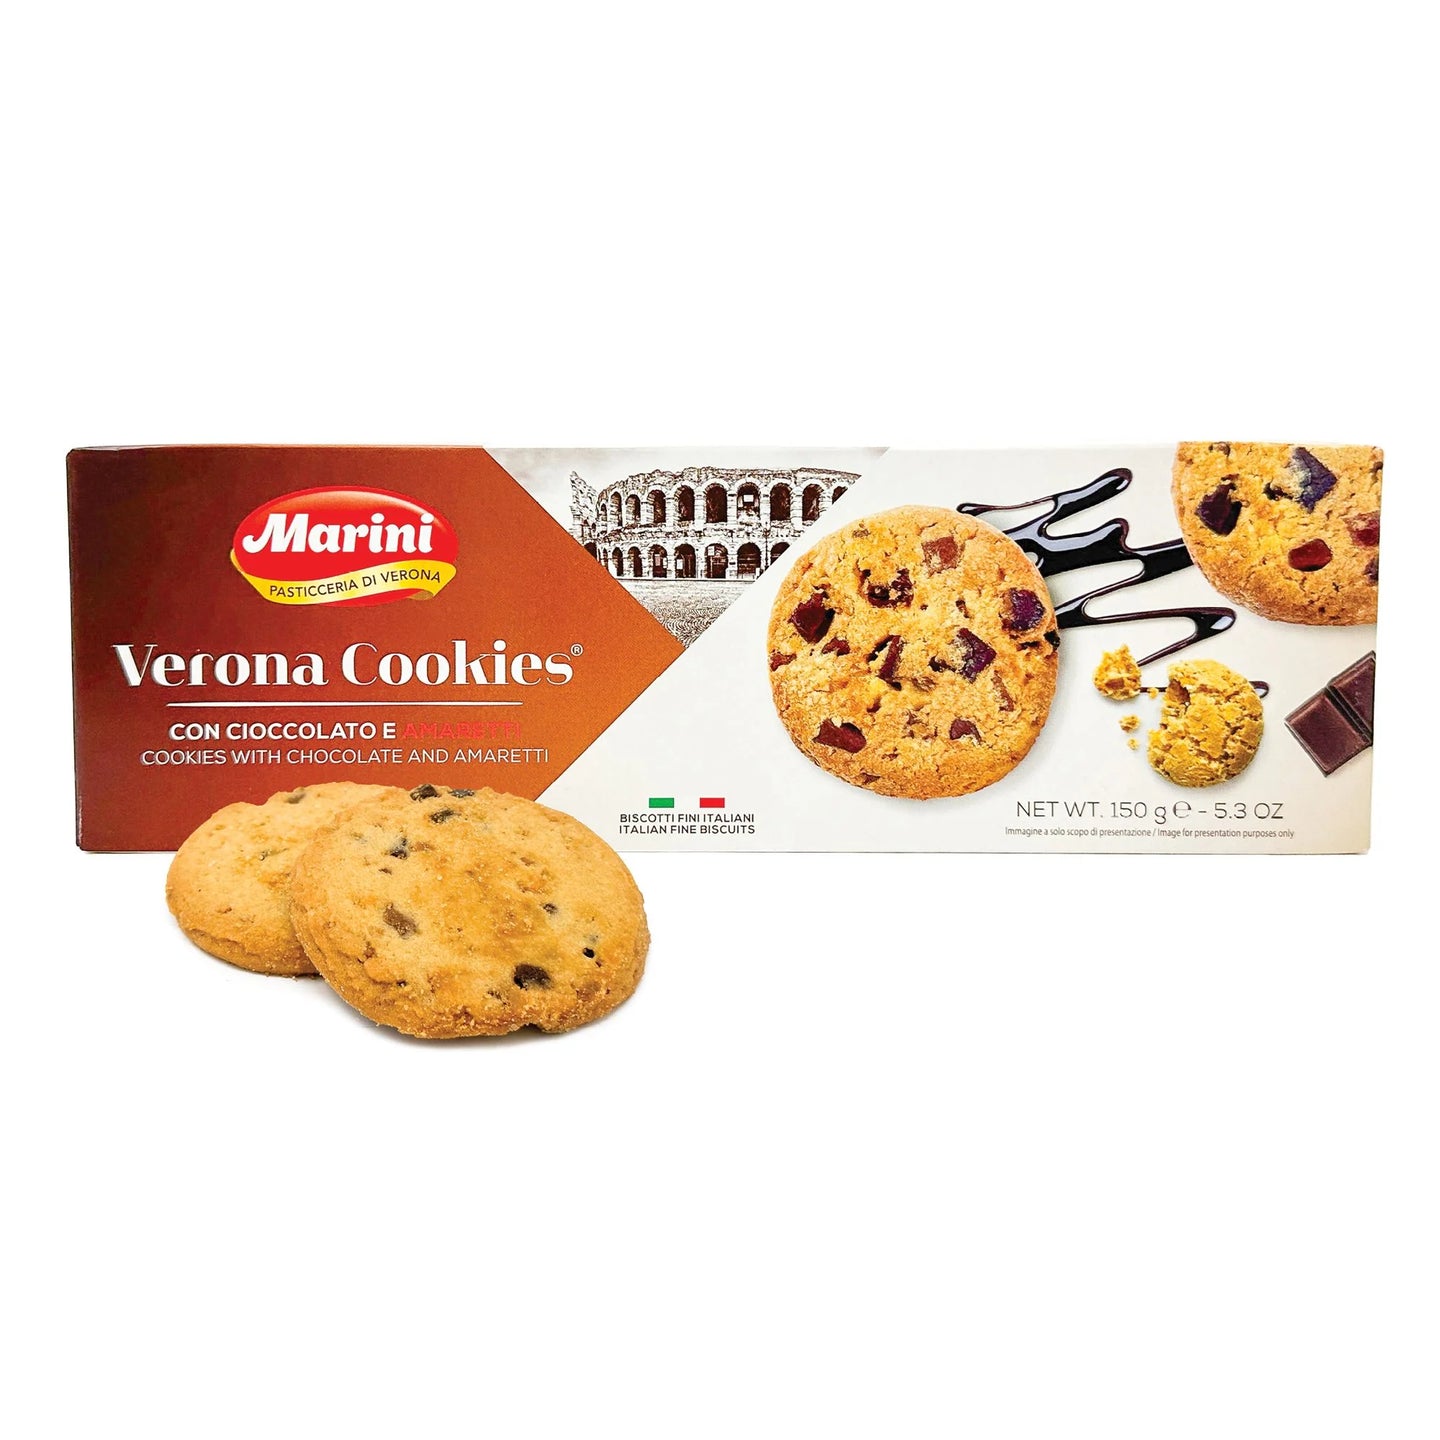 Marini Verona Cookies